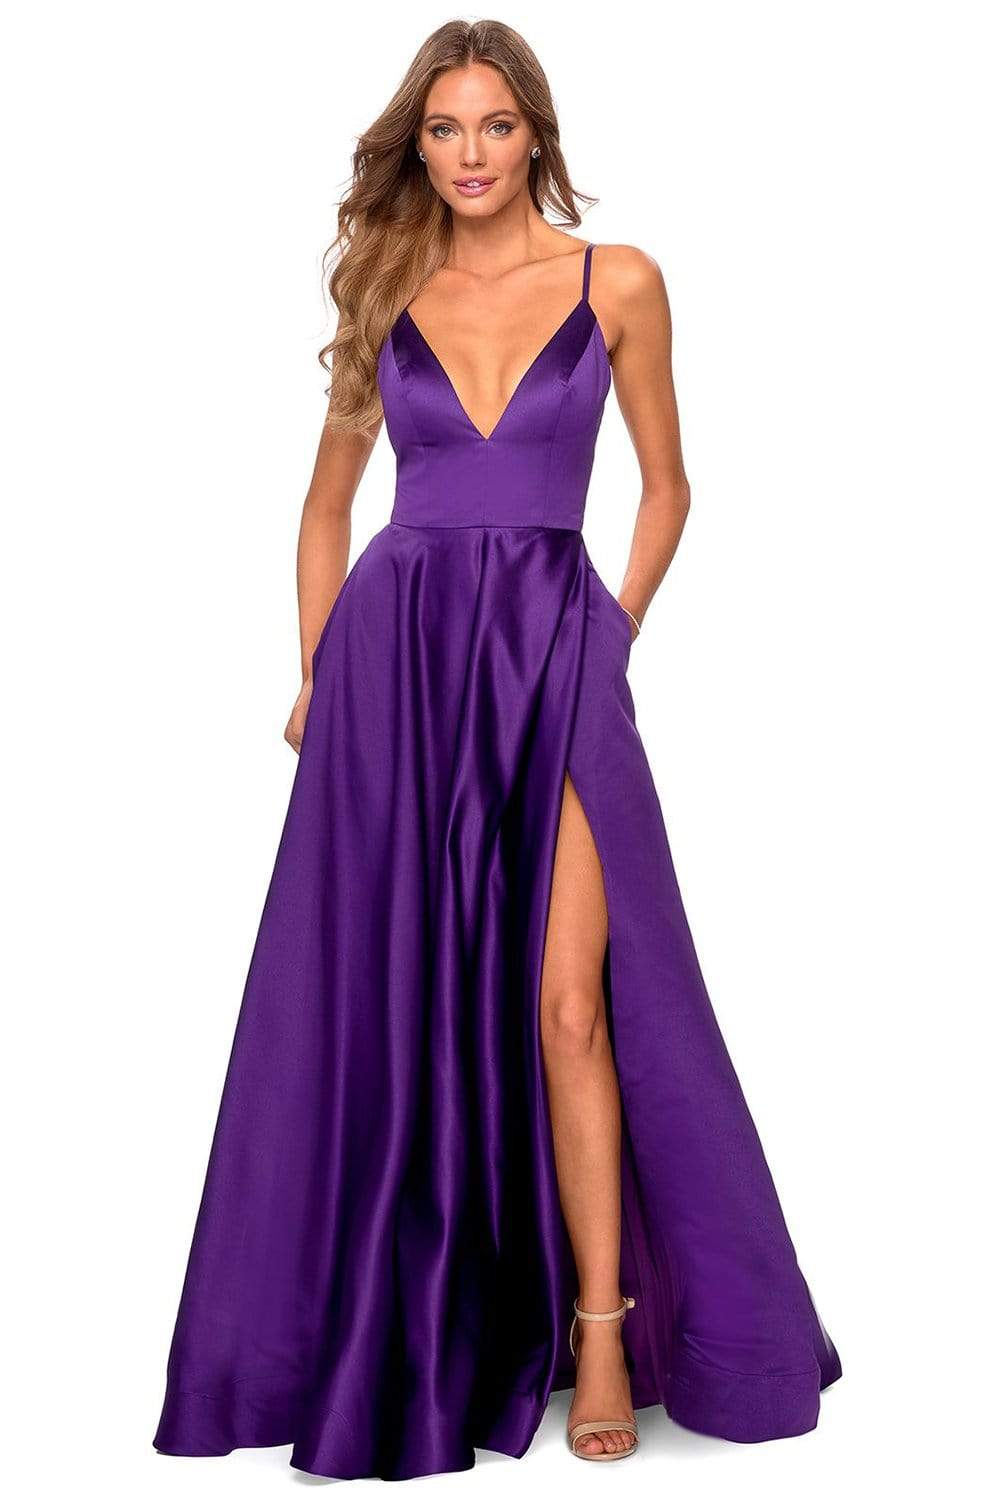 High Neck Cut-out Bodice Glossy Purple Prom Dress - Xdressy